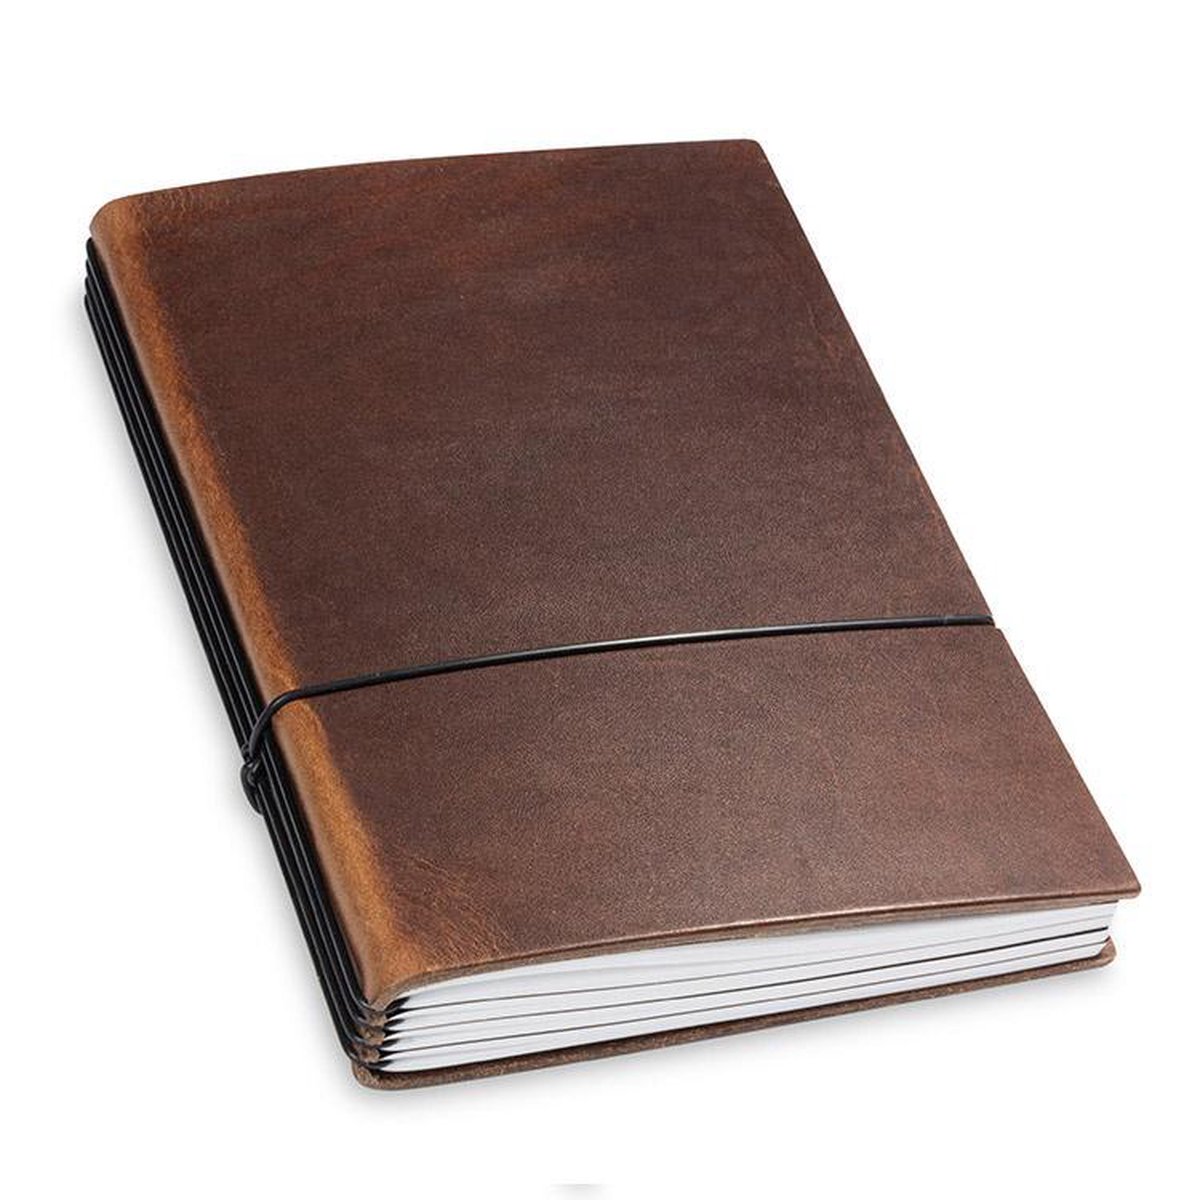 X17 Notebook A5 Leder Natur Marrone - 4 katernen